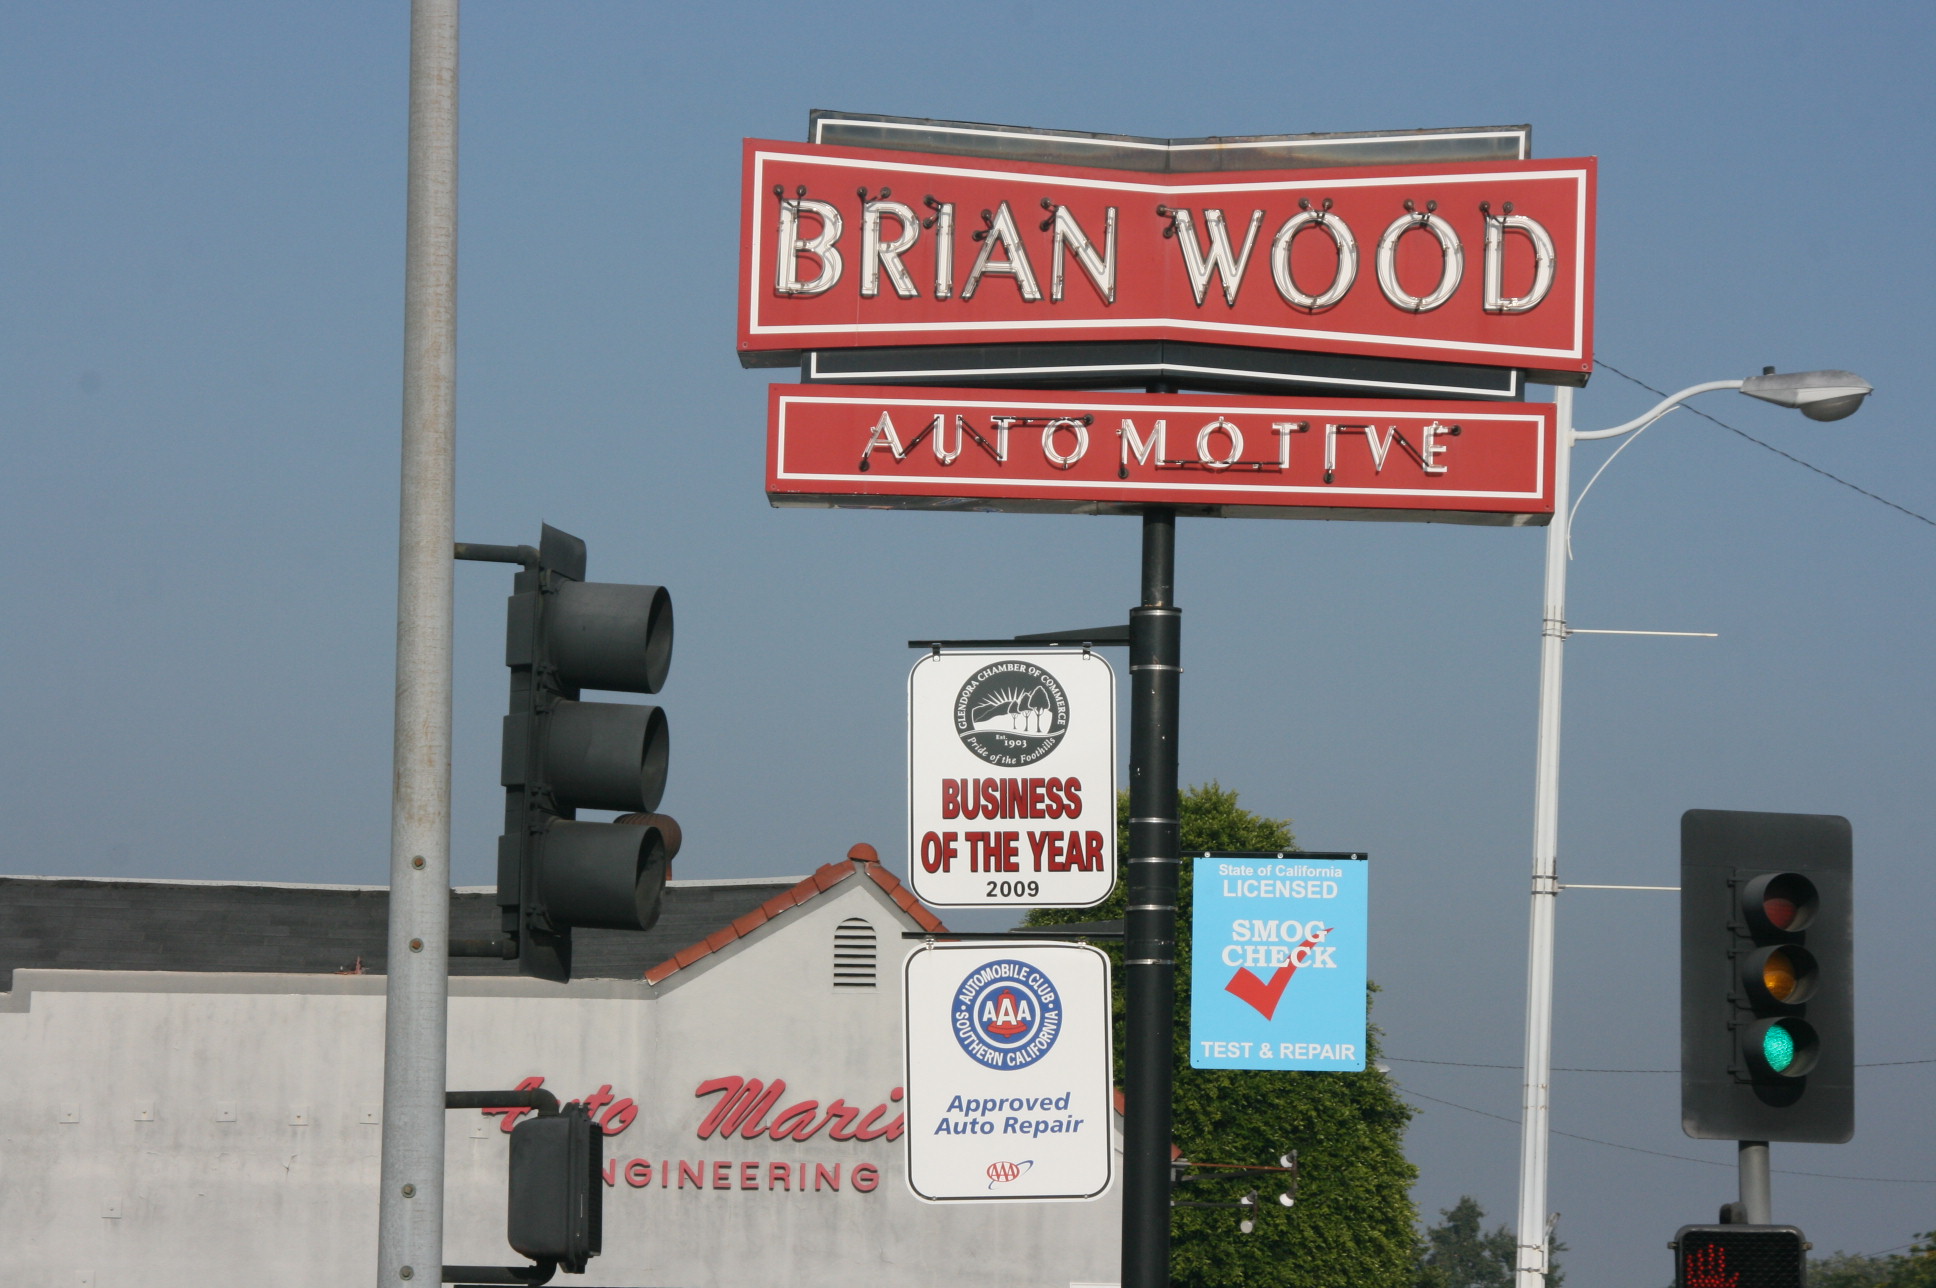 Brian Wood Automotive